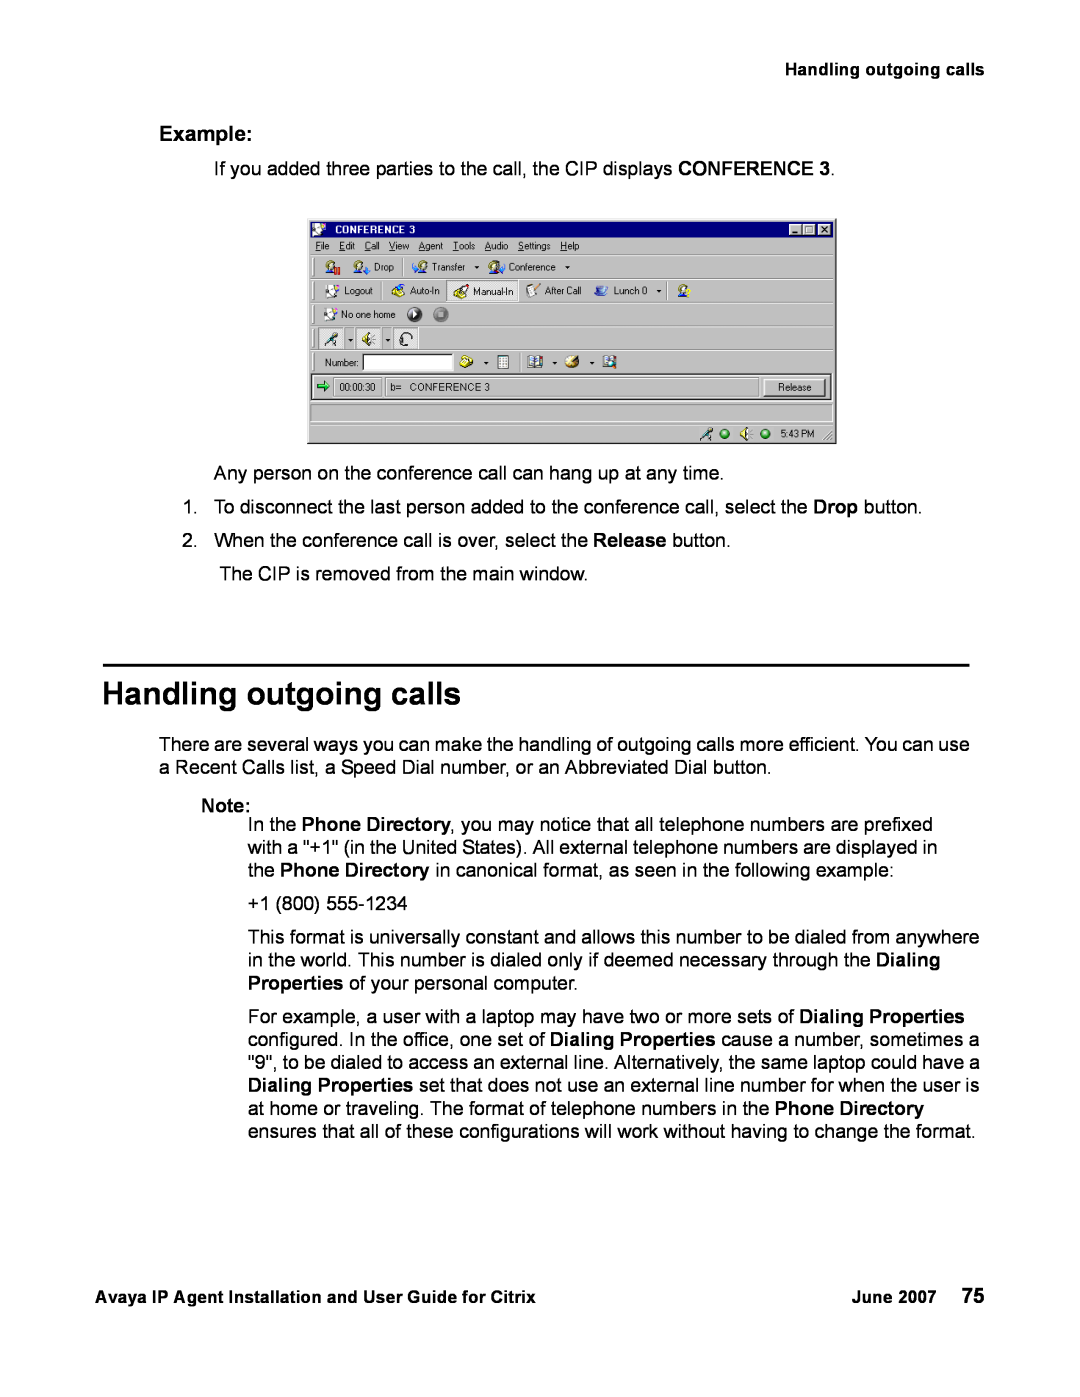 Avaya 7 manual Handling outgoing calls, Example 